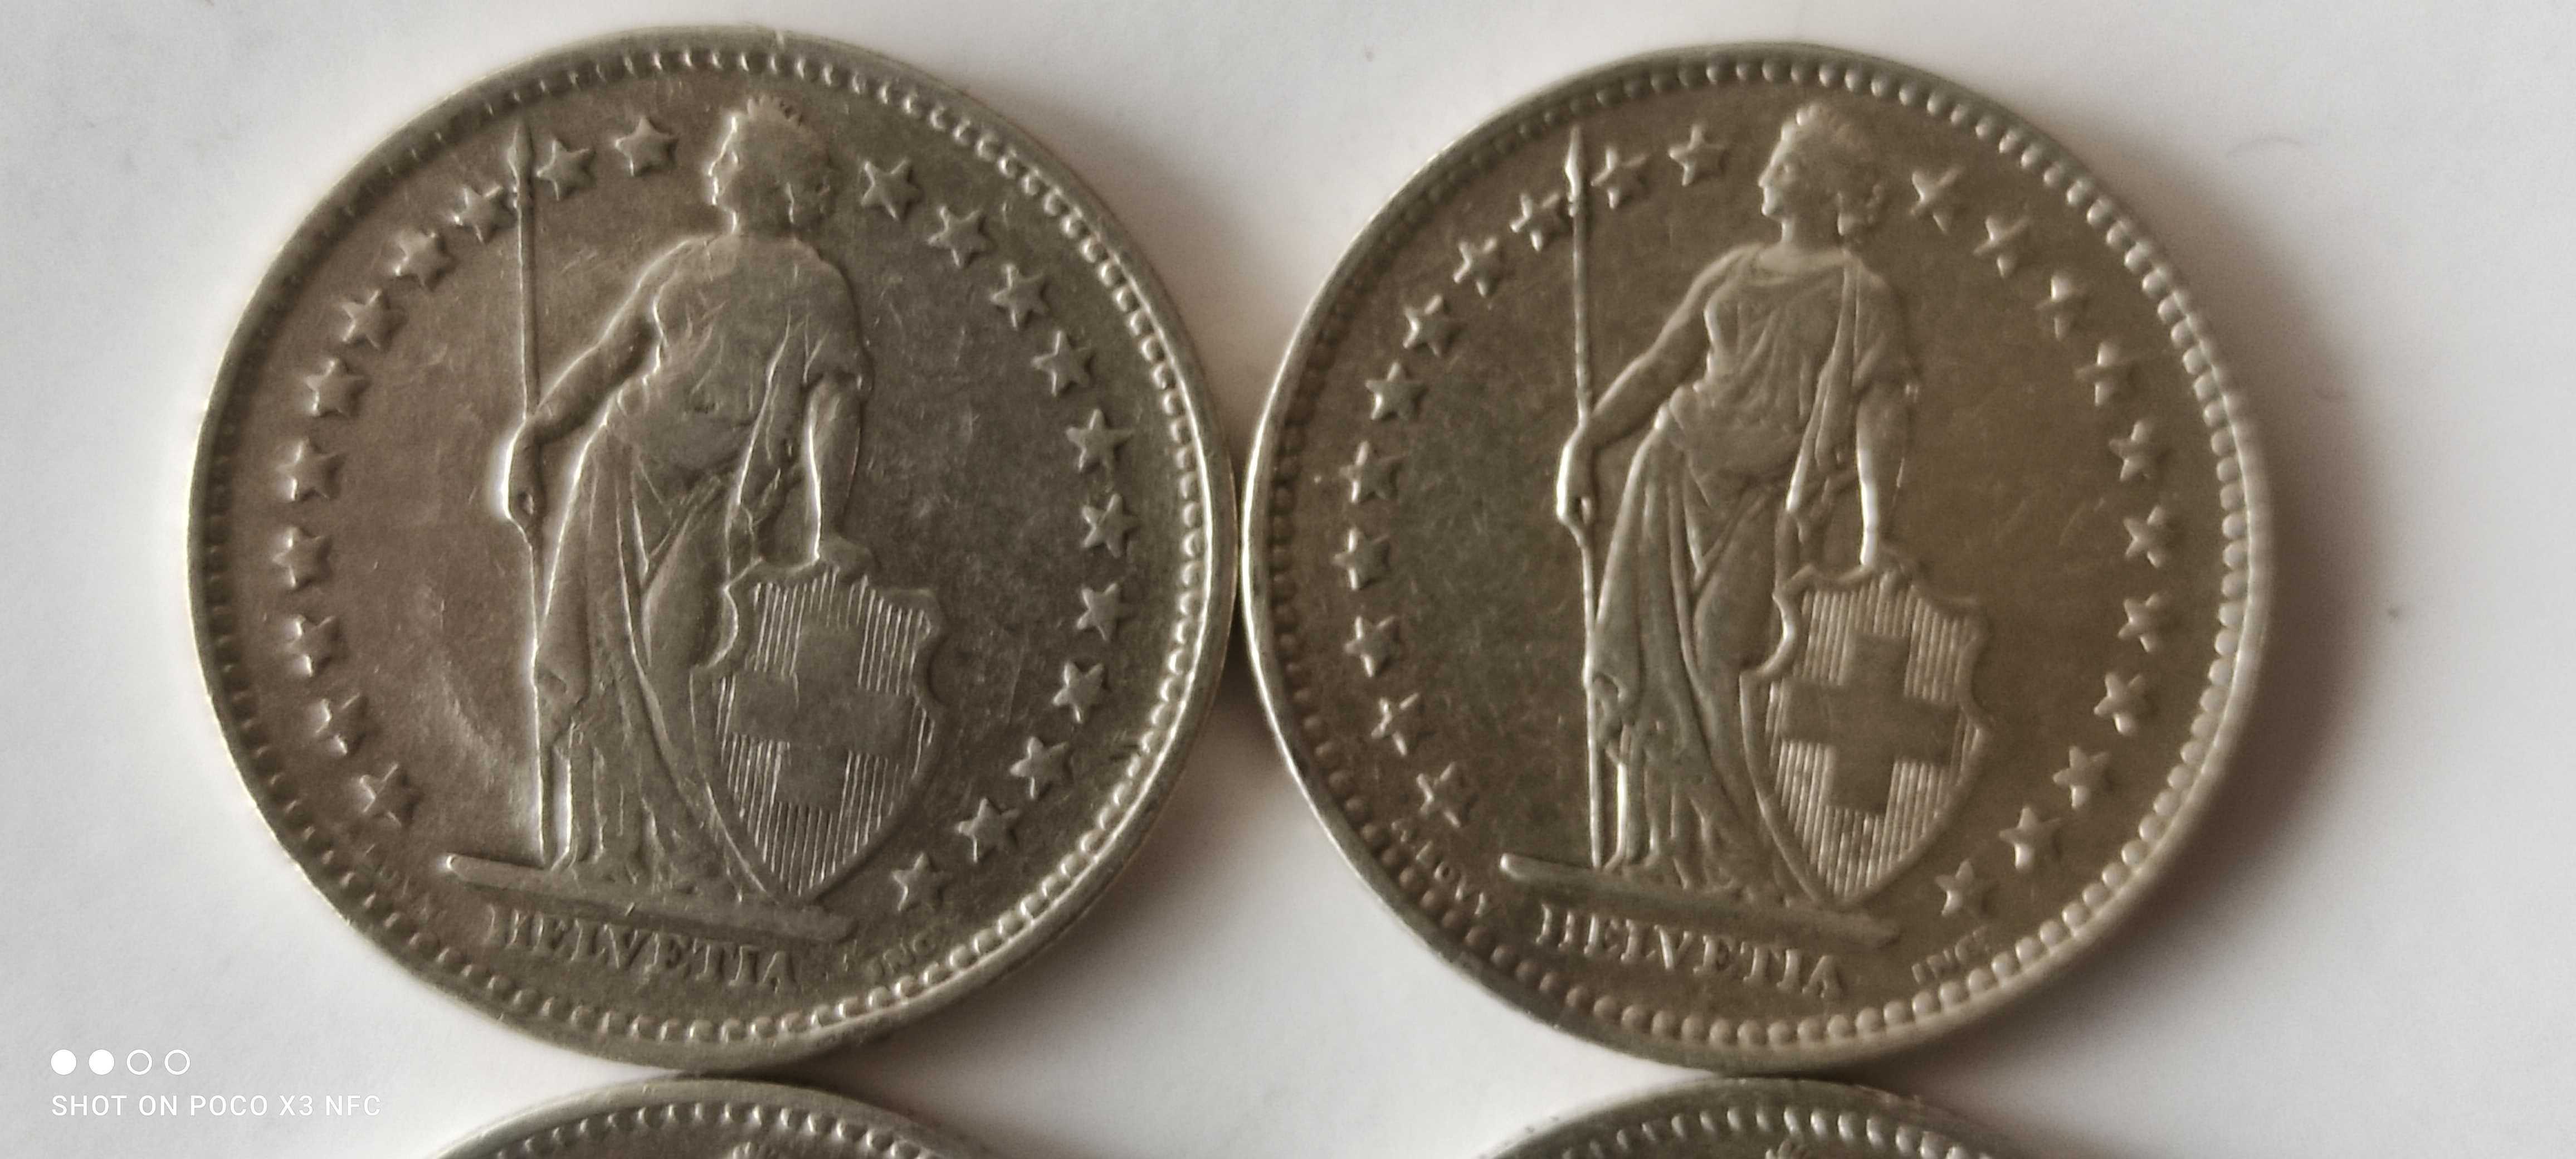 Monety srebrne zestaw 4 sztuk Szwajcaria 2 franki ładne srebro Ag